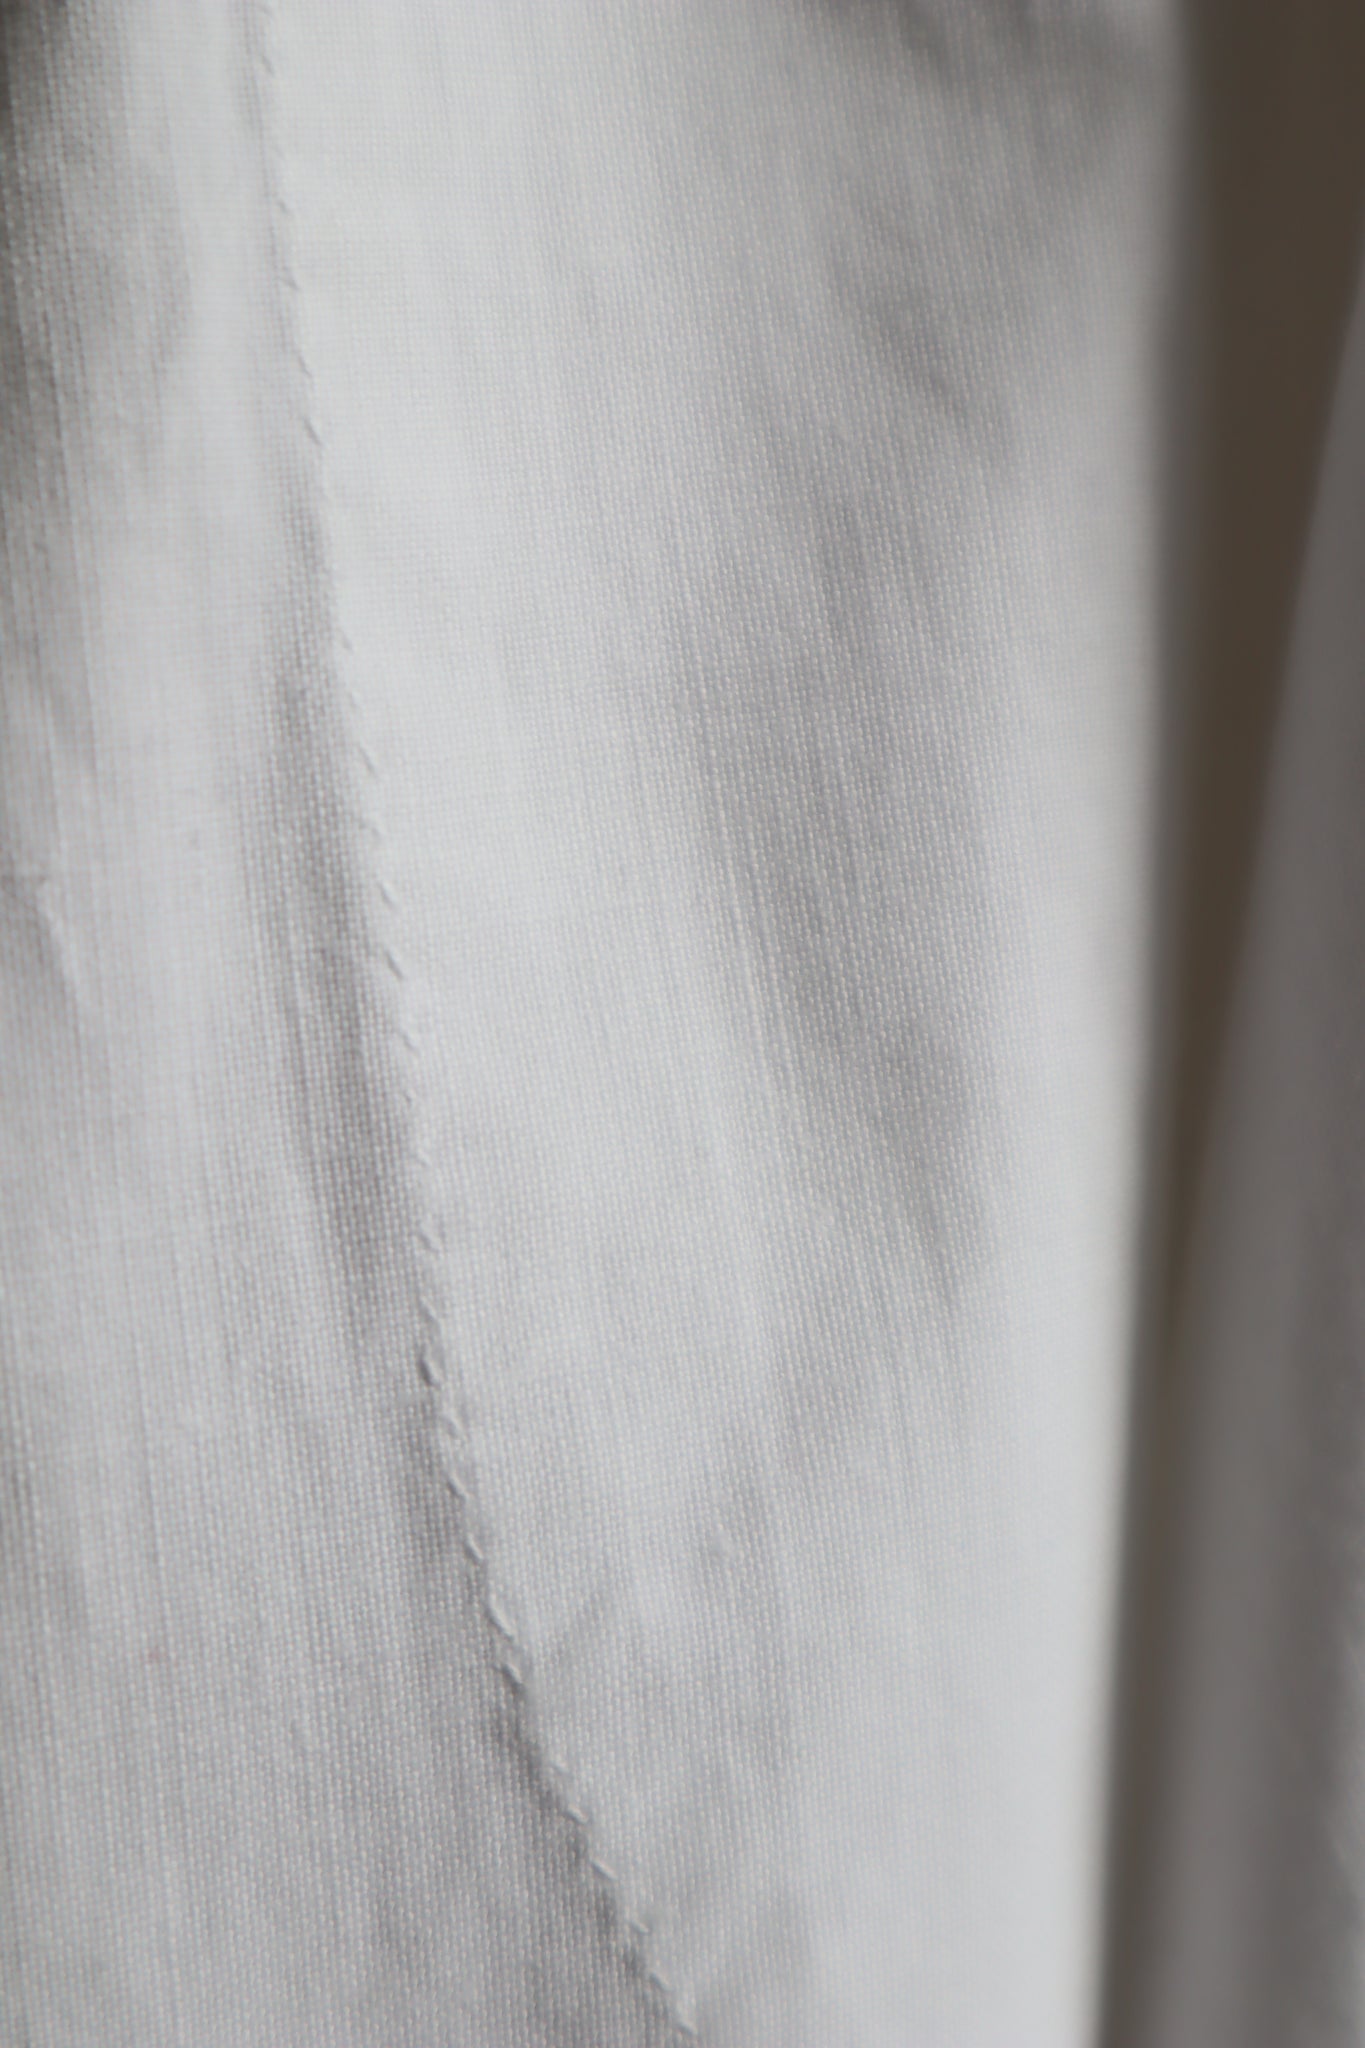 1900s Hand Sewn Zigzag Design White Cotton Dress